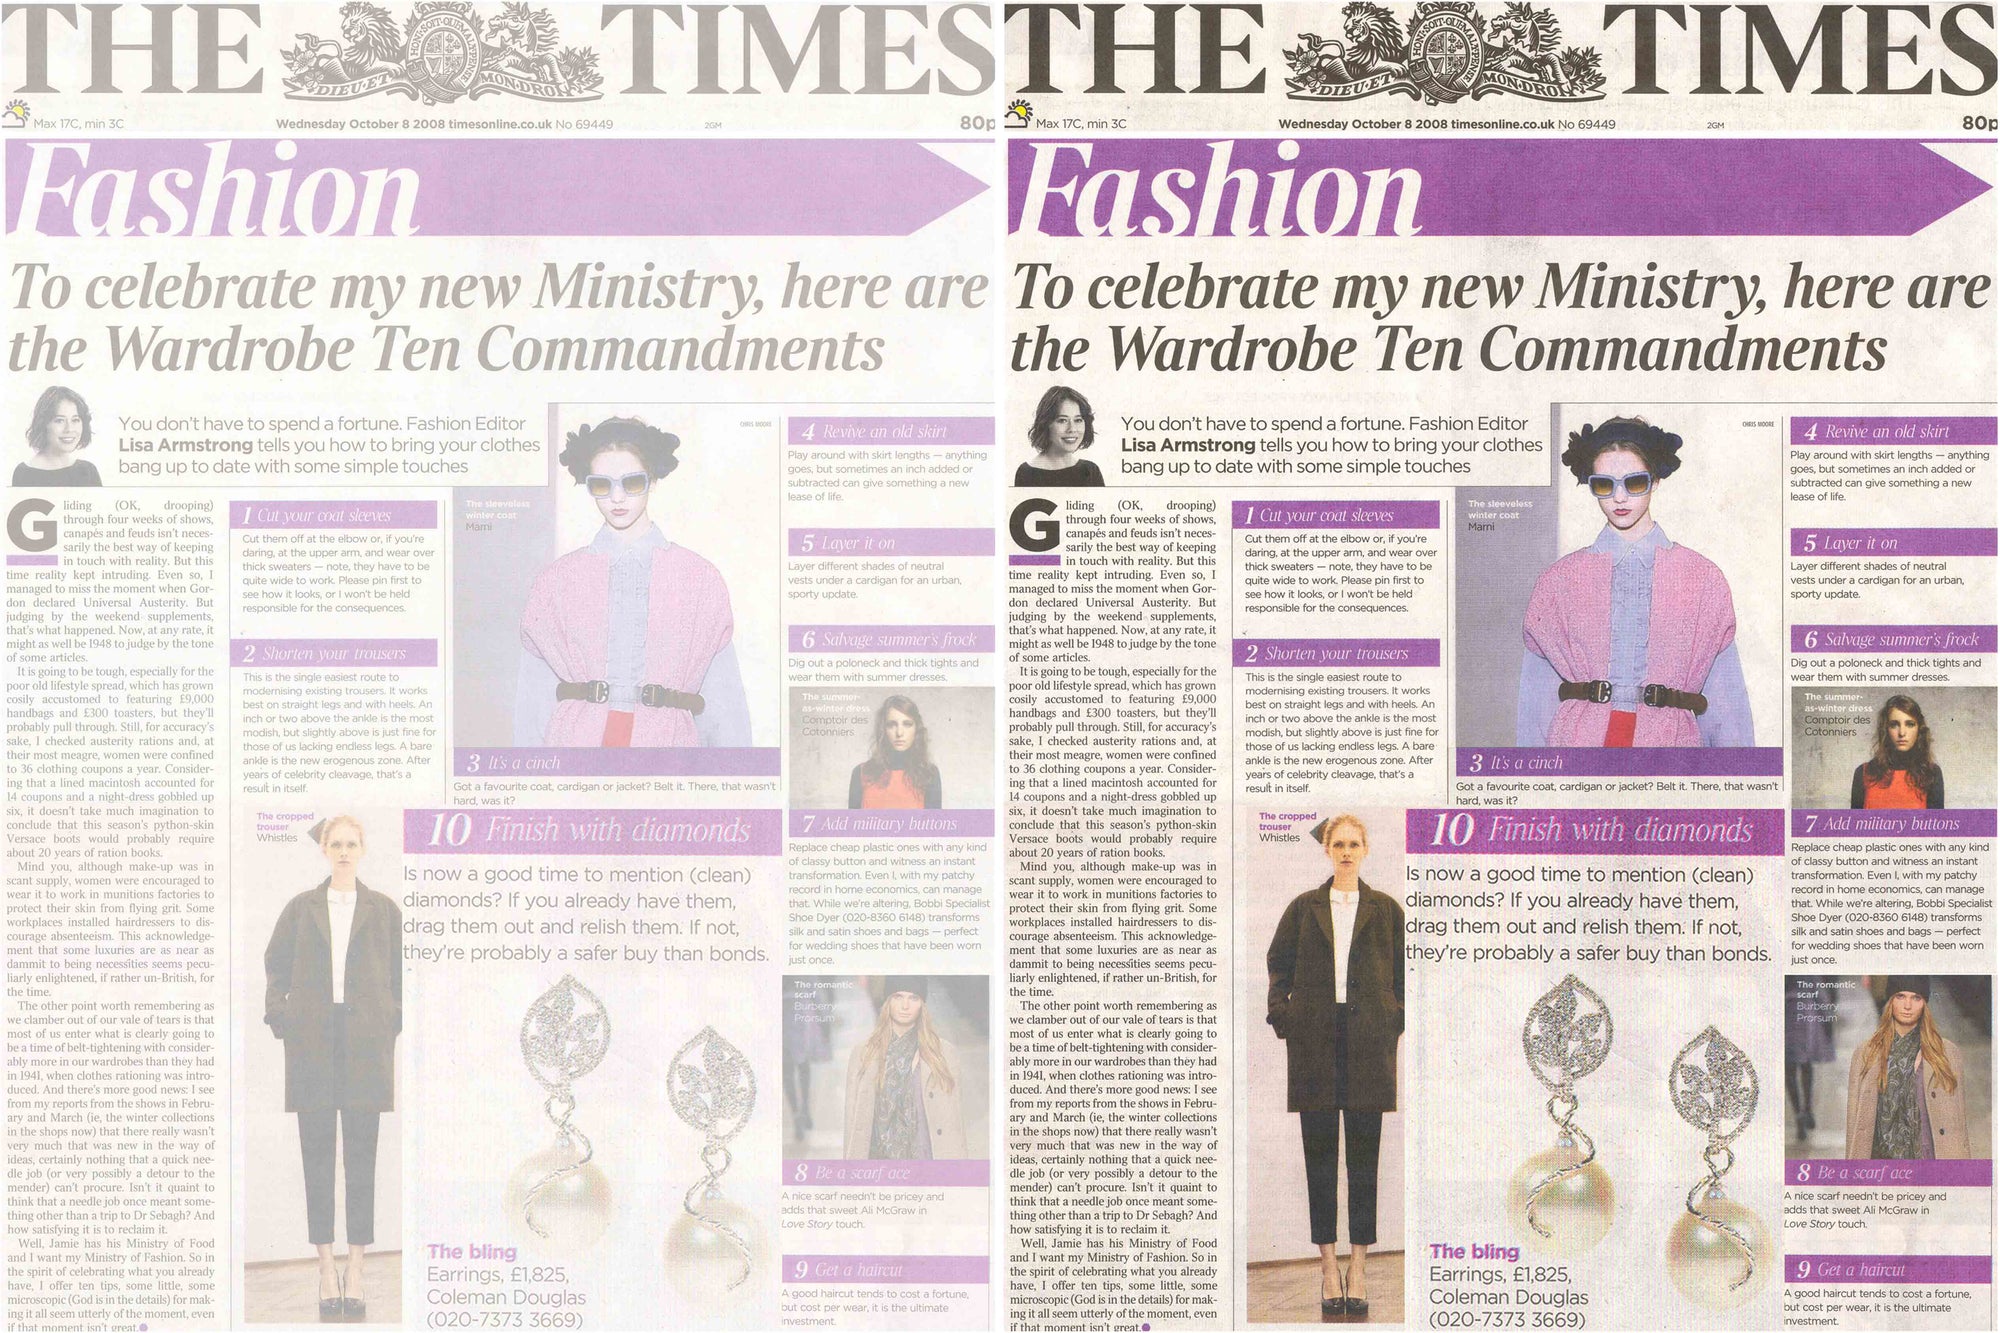 The Times - Fashion